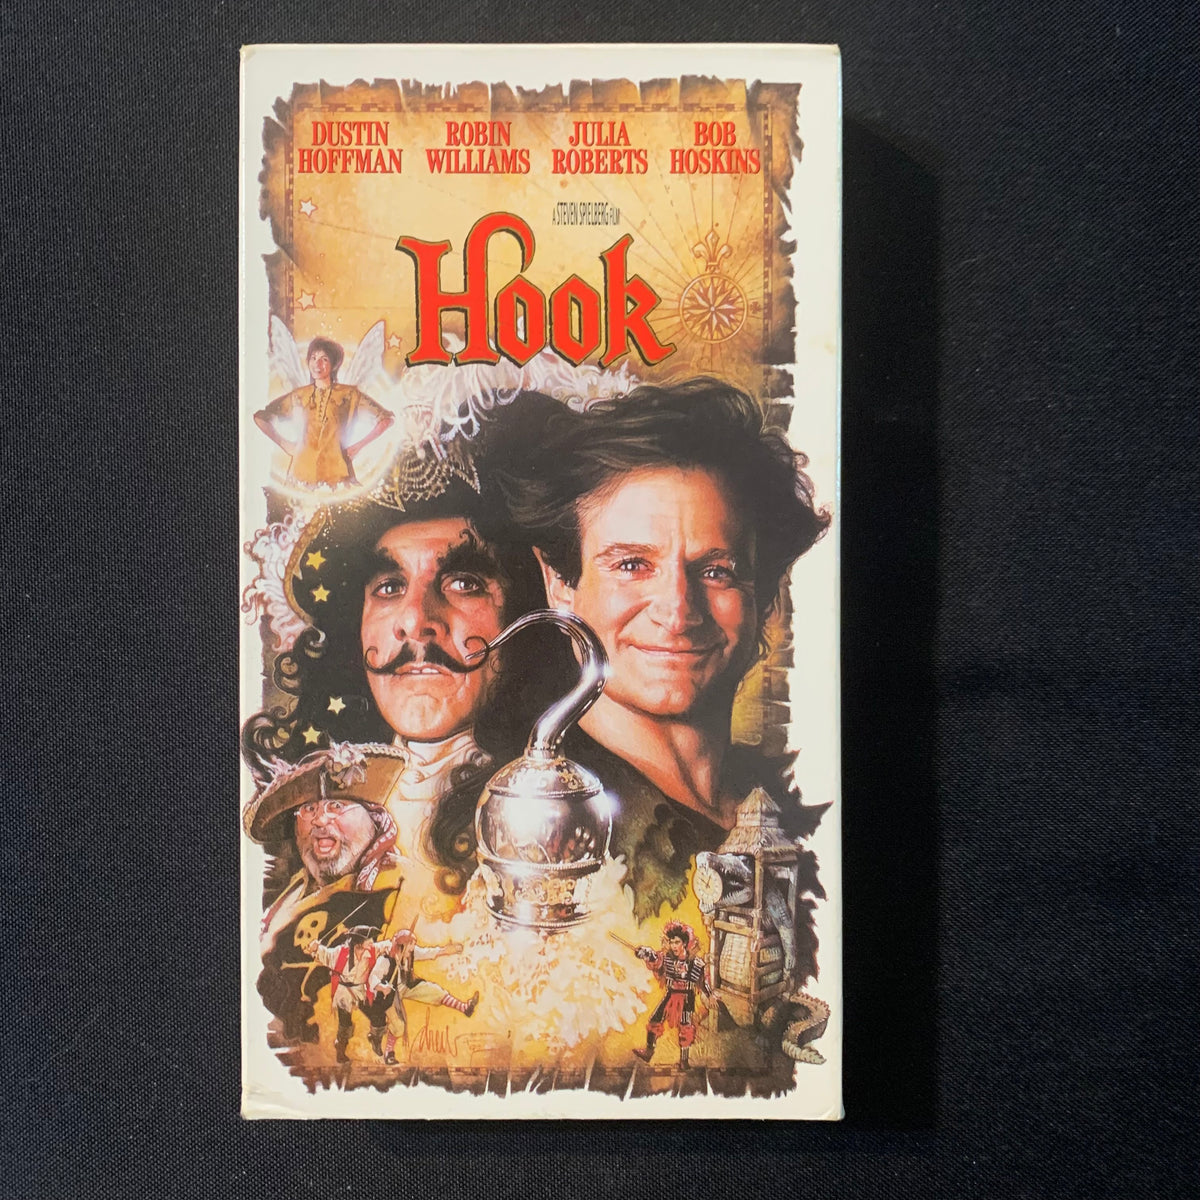 VHS Hook (1992) Dustin Hoffman